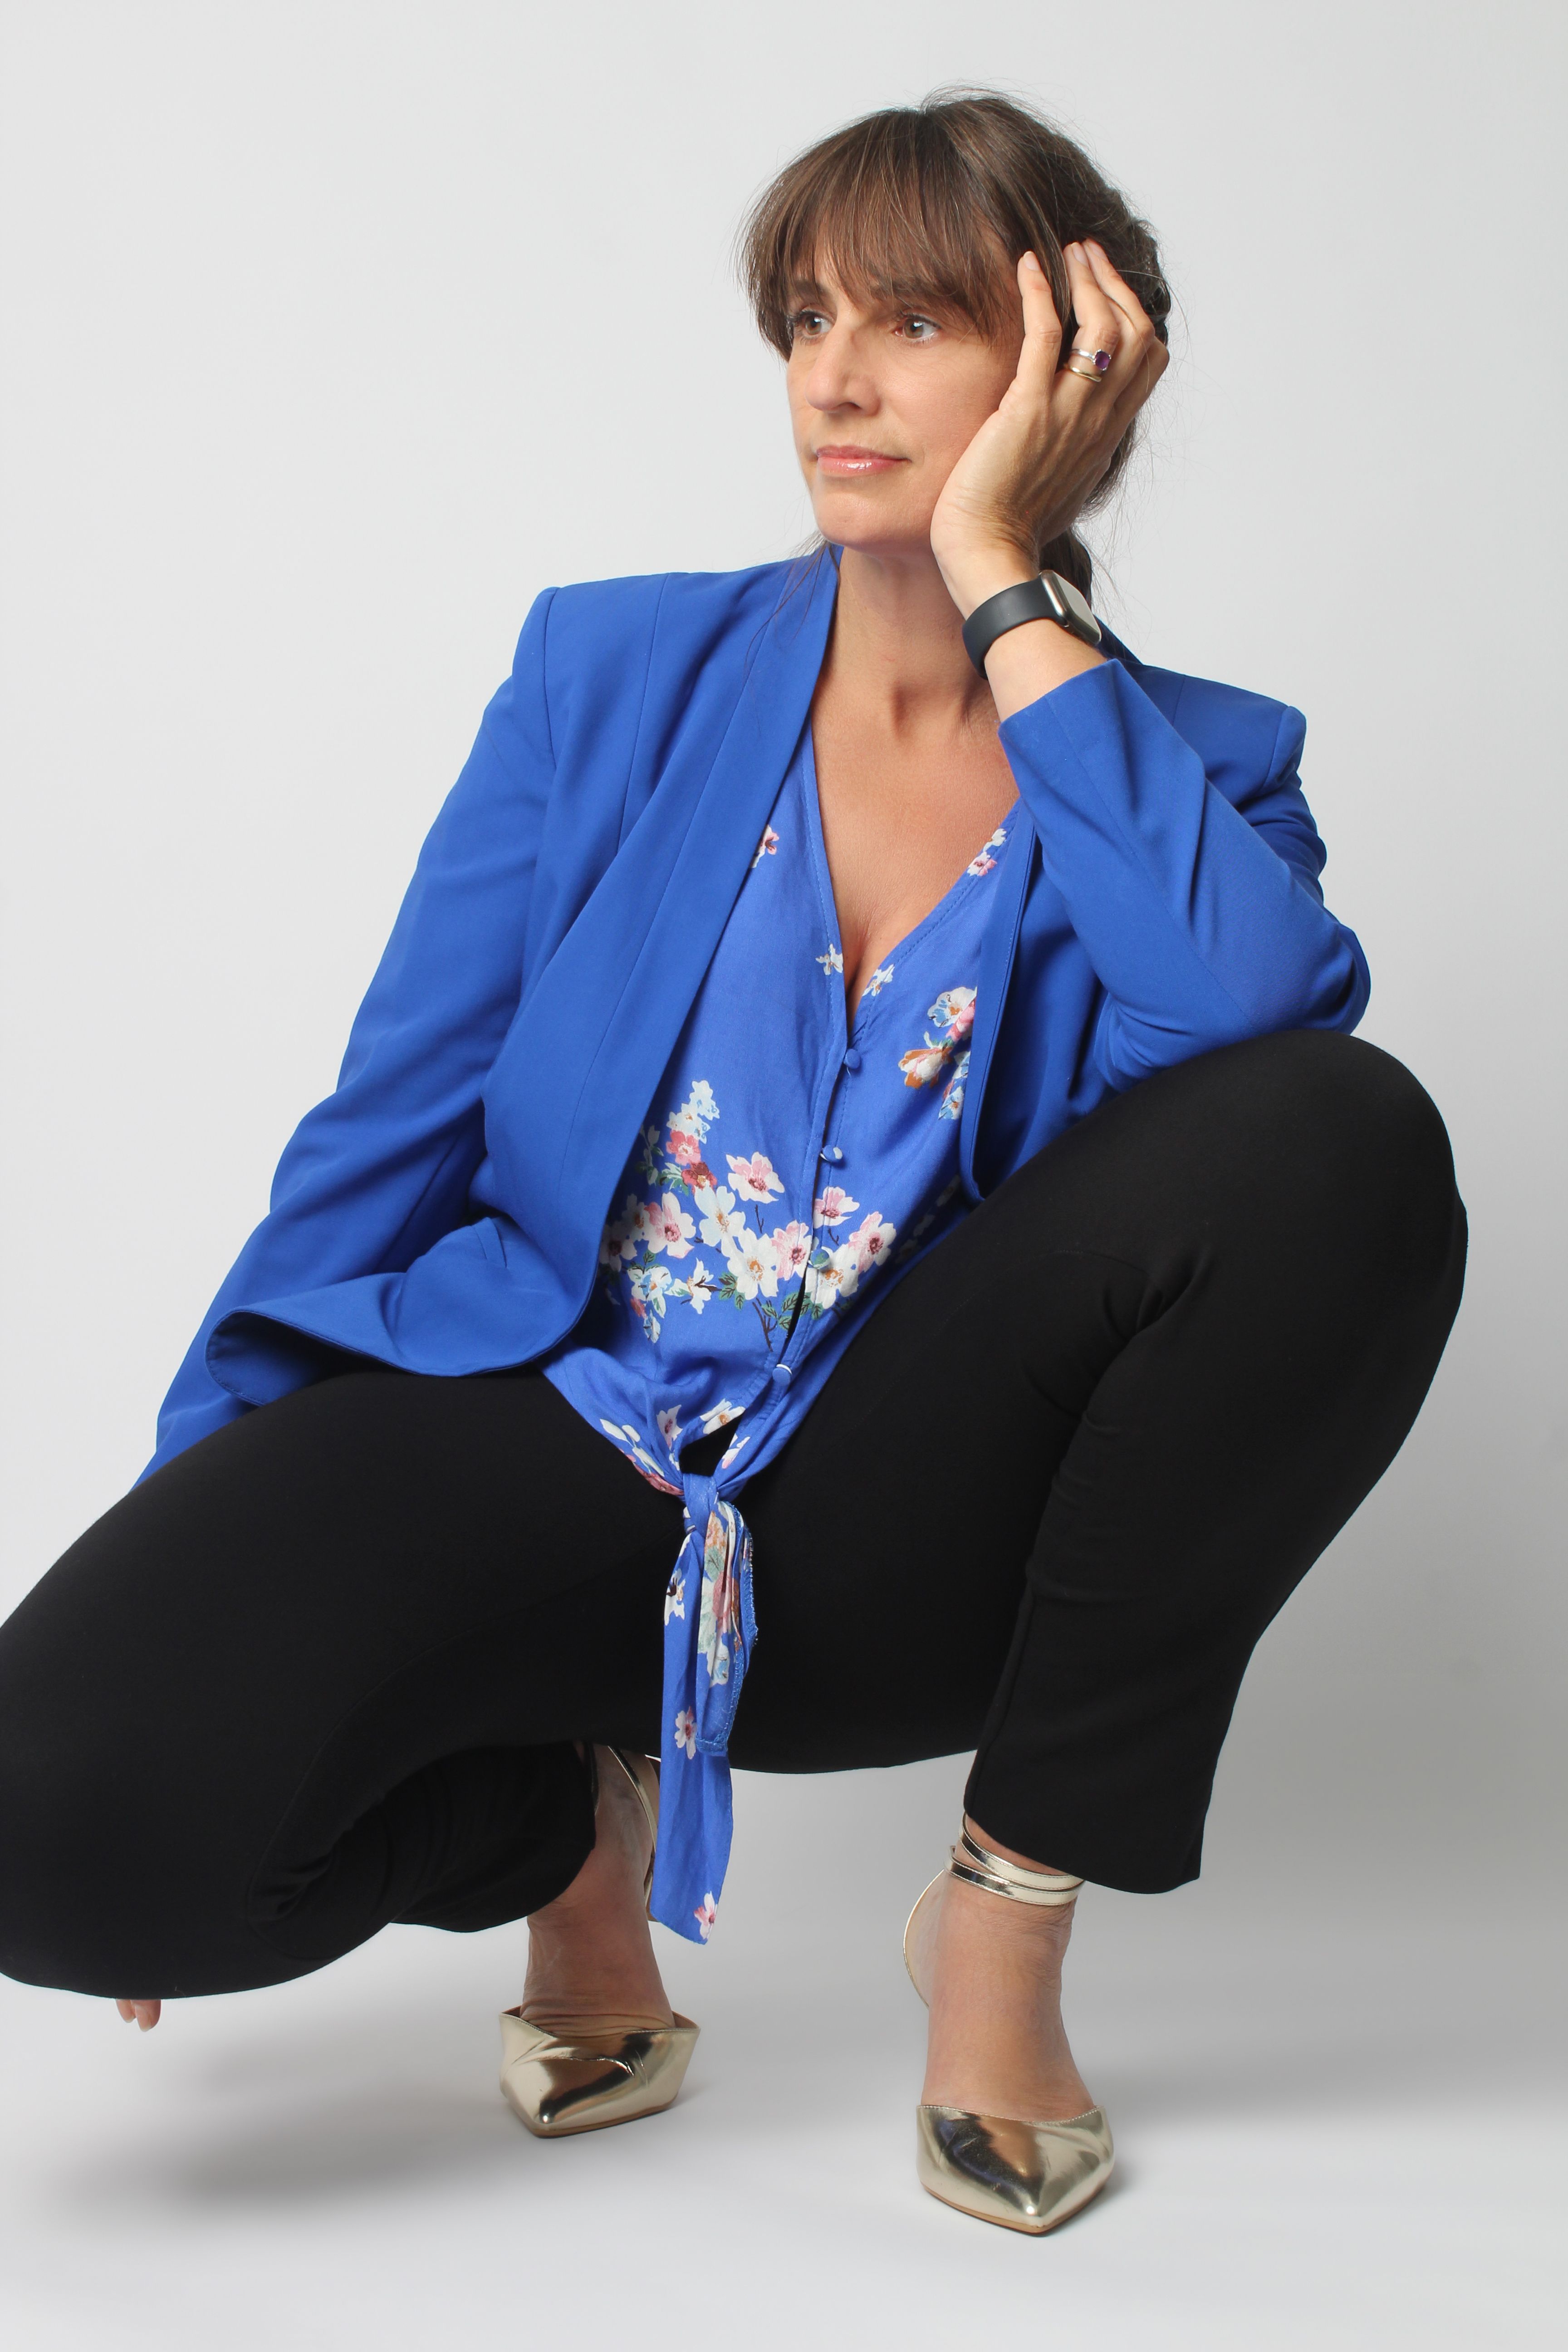 Nicola Wakley Profile | YUMM - Your Model Management